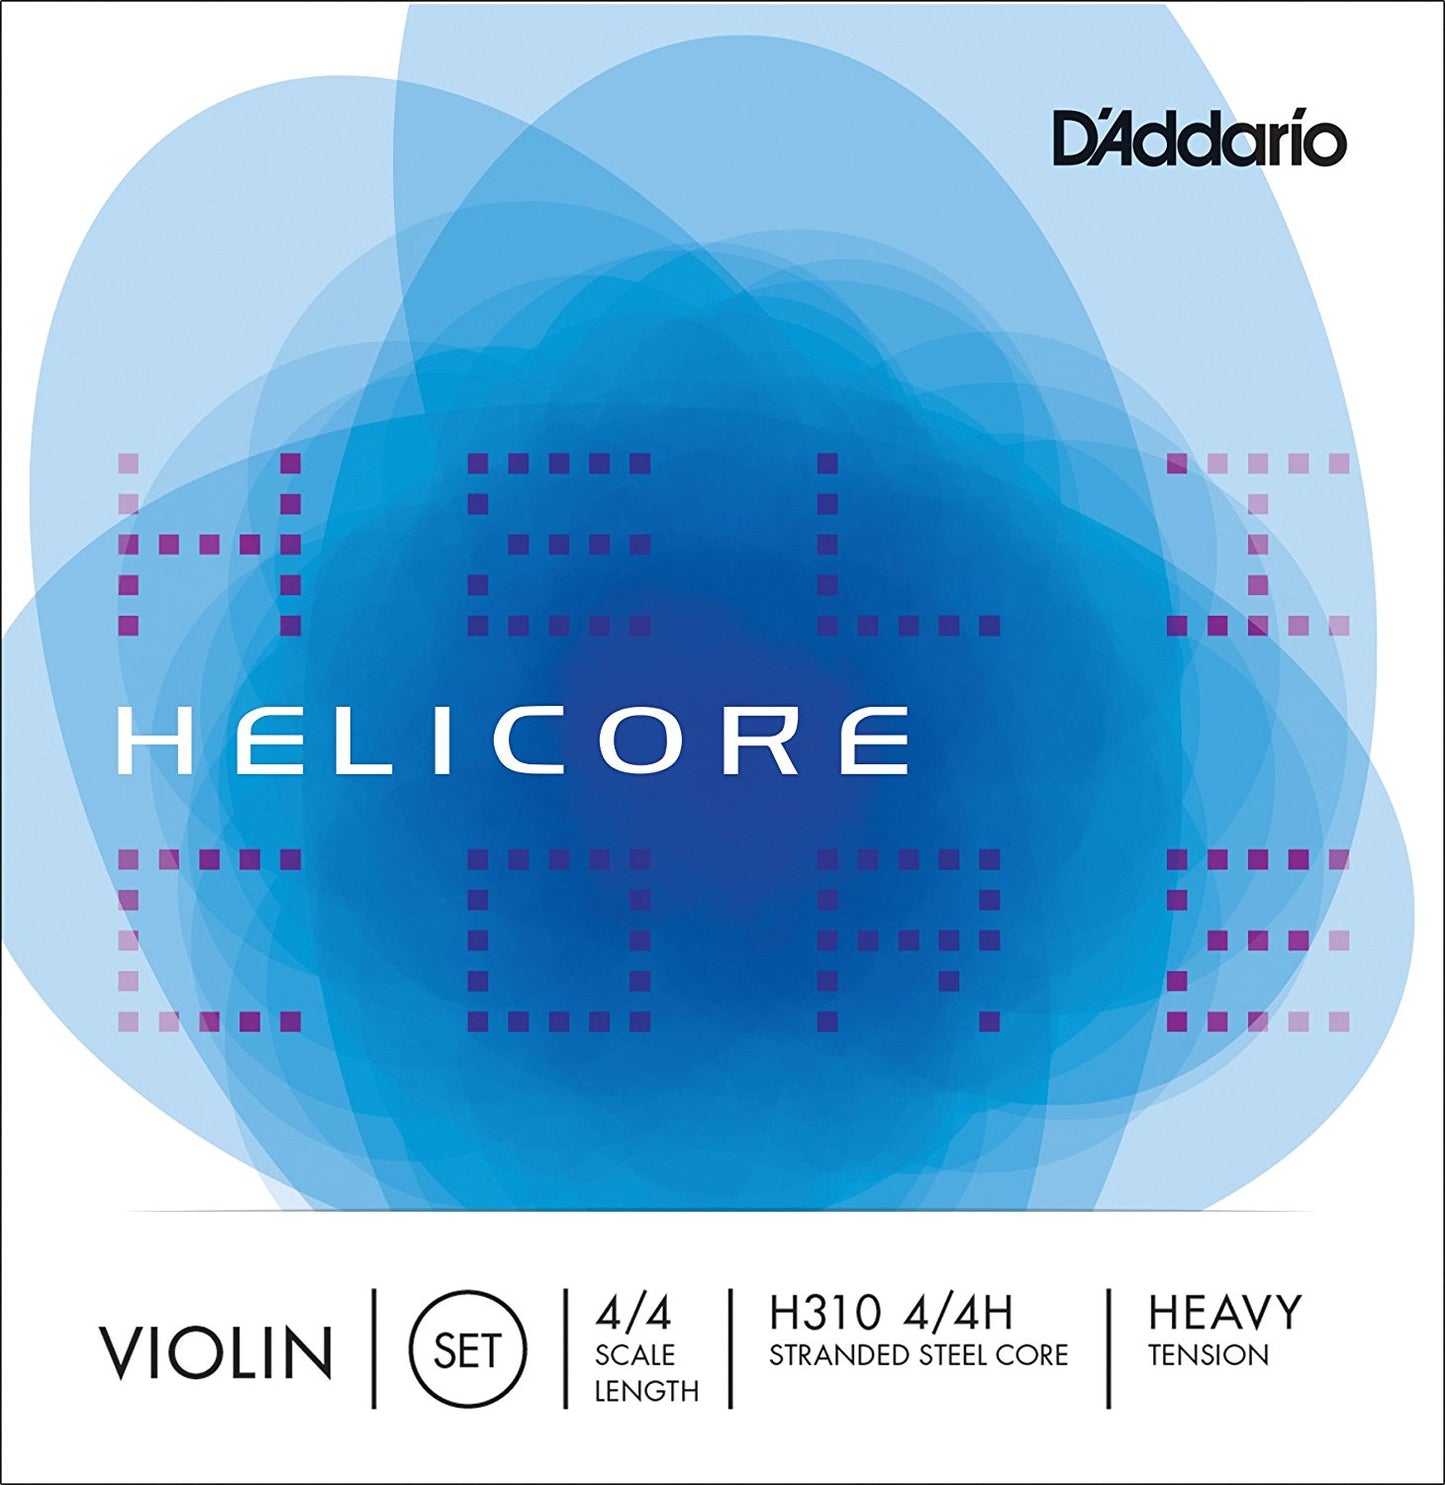 D'Addario Helicore Violin Set Strings 4/4 Size Heavy